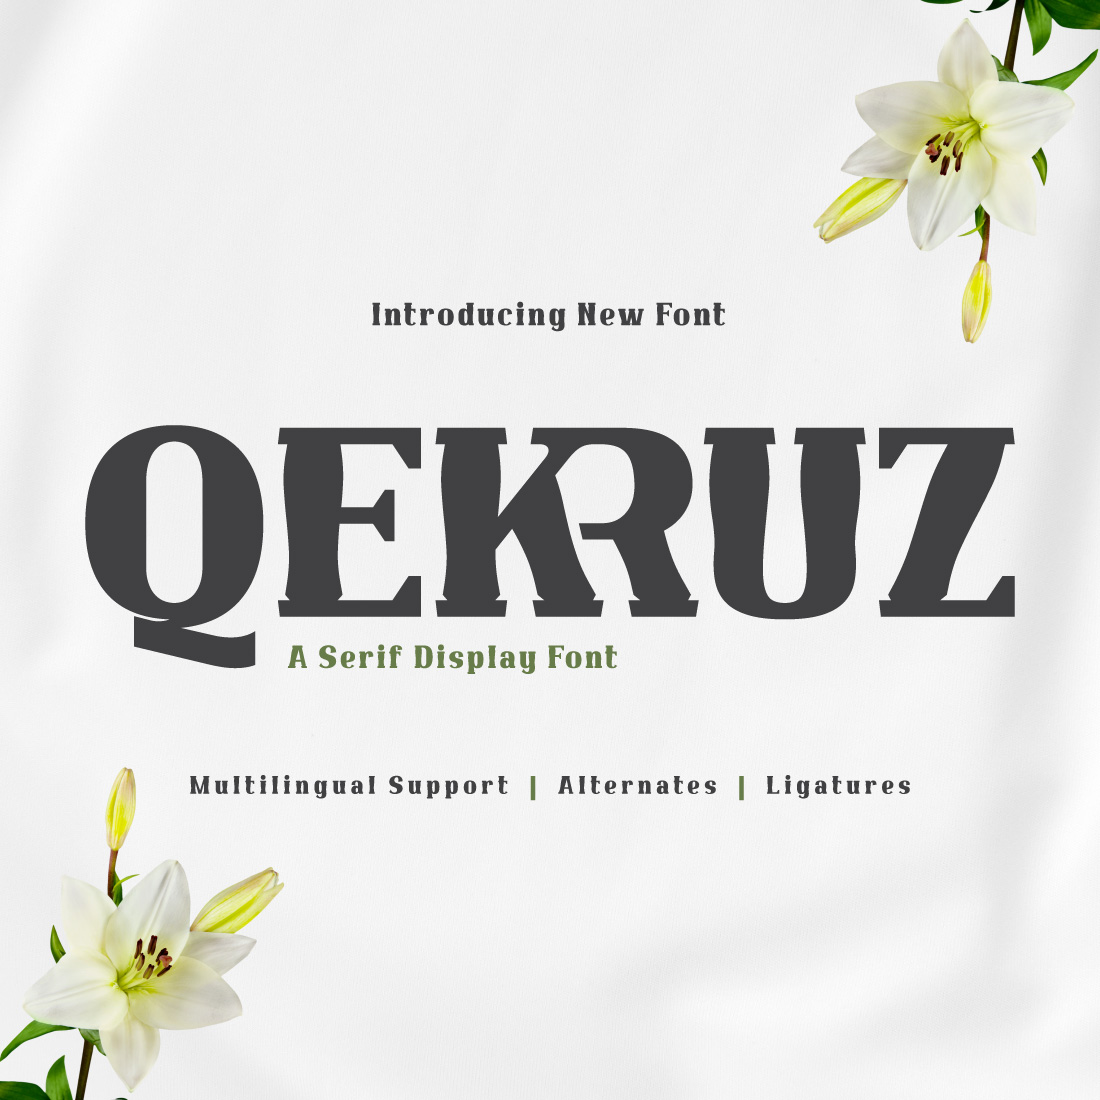 Qekruz | Serif Classic Modernism cover image.